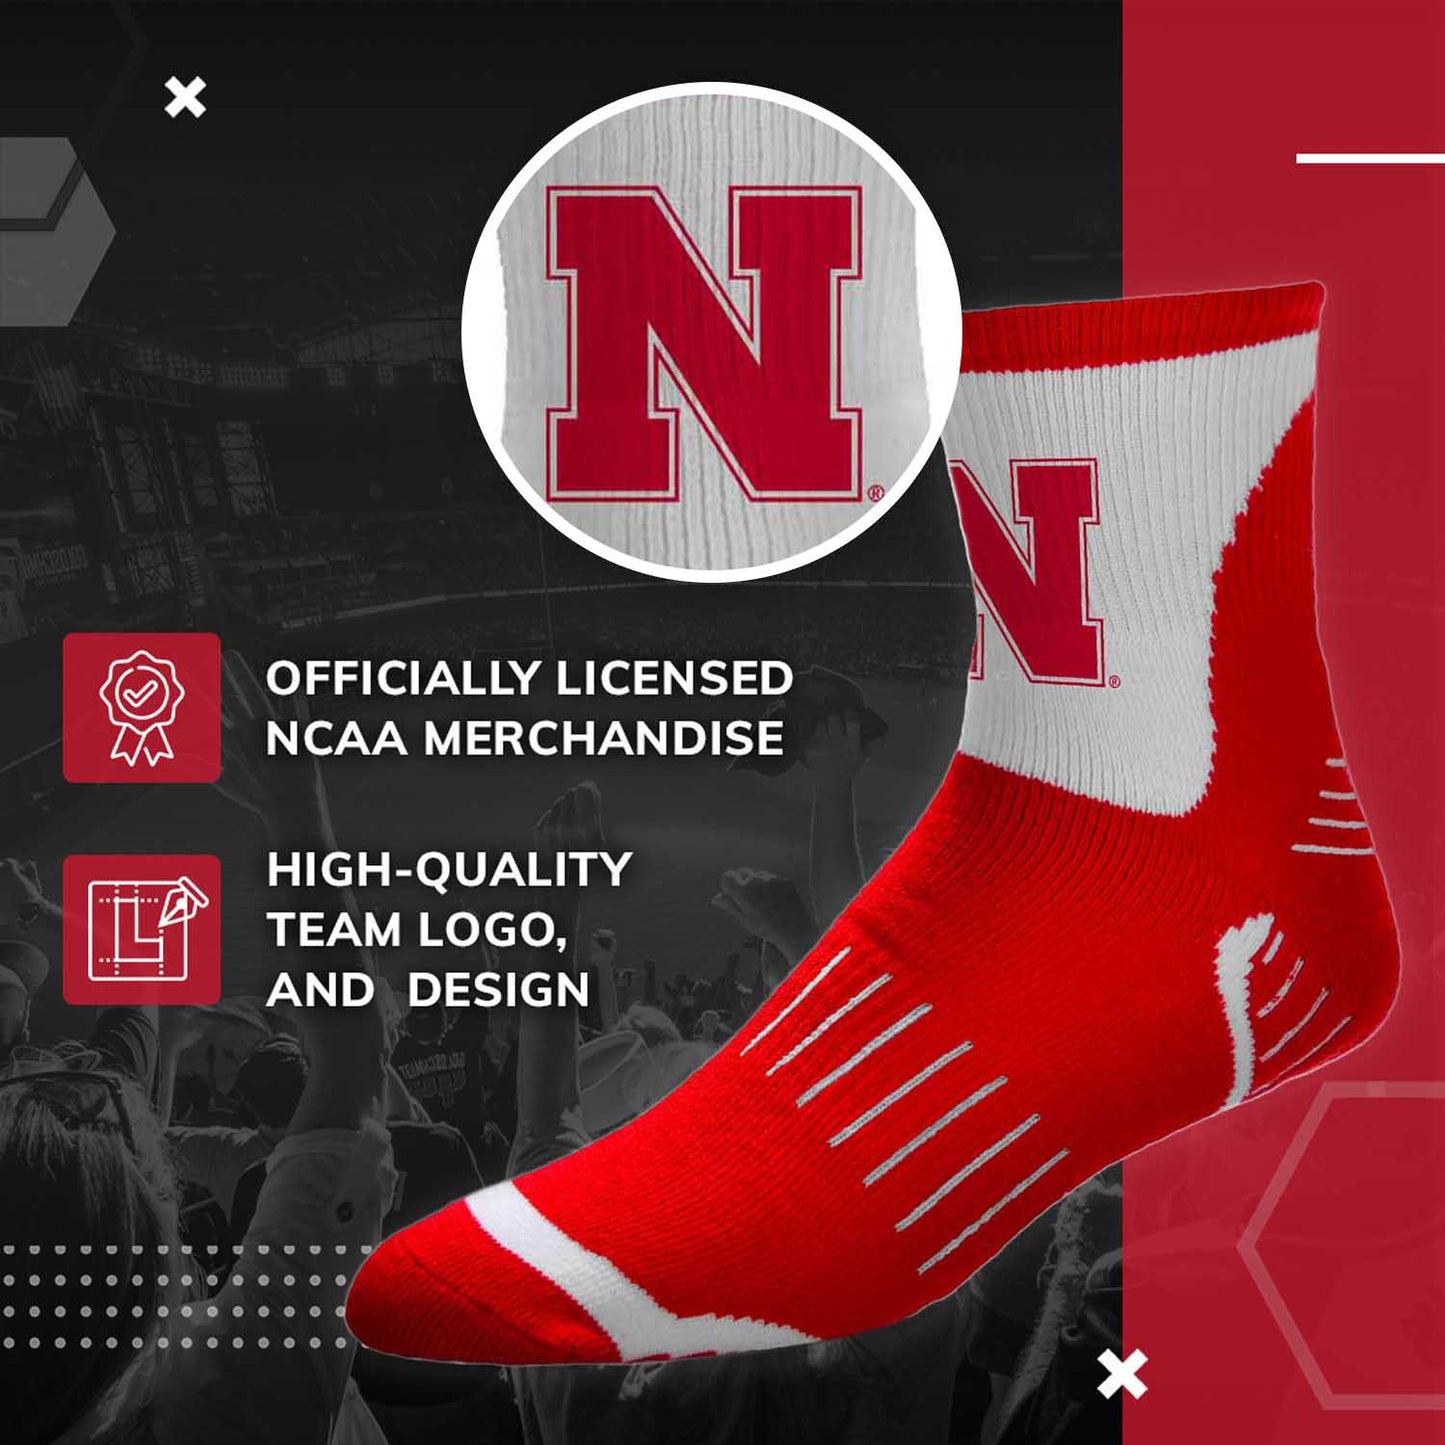 Nebraska Cornhuskers NCAA Youth Surge Team Mascot Quarter Socks - Red